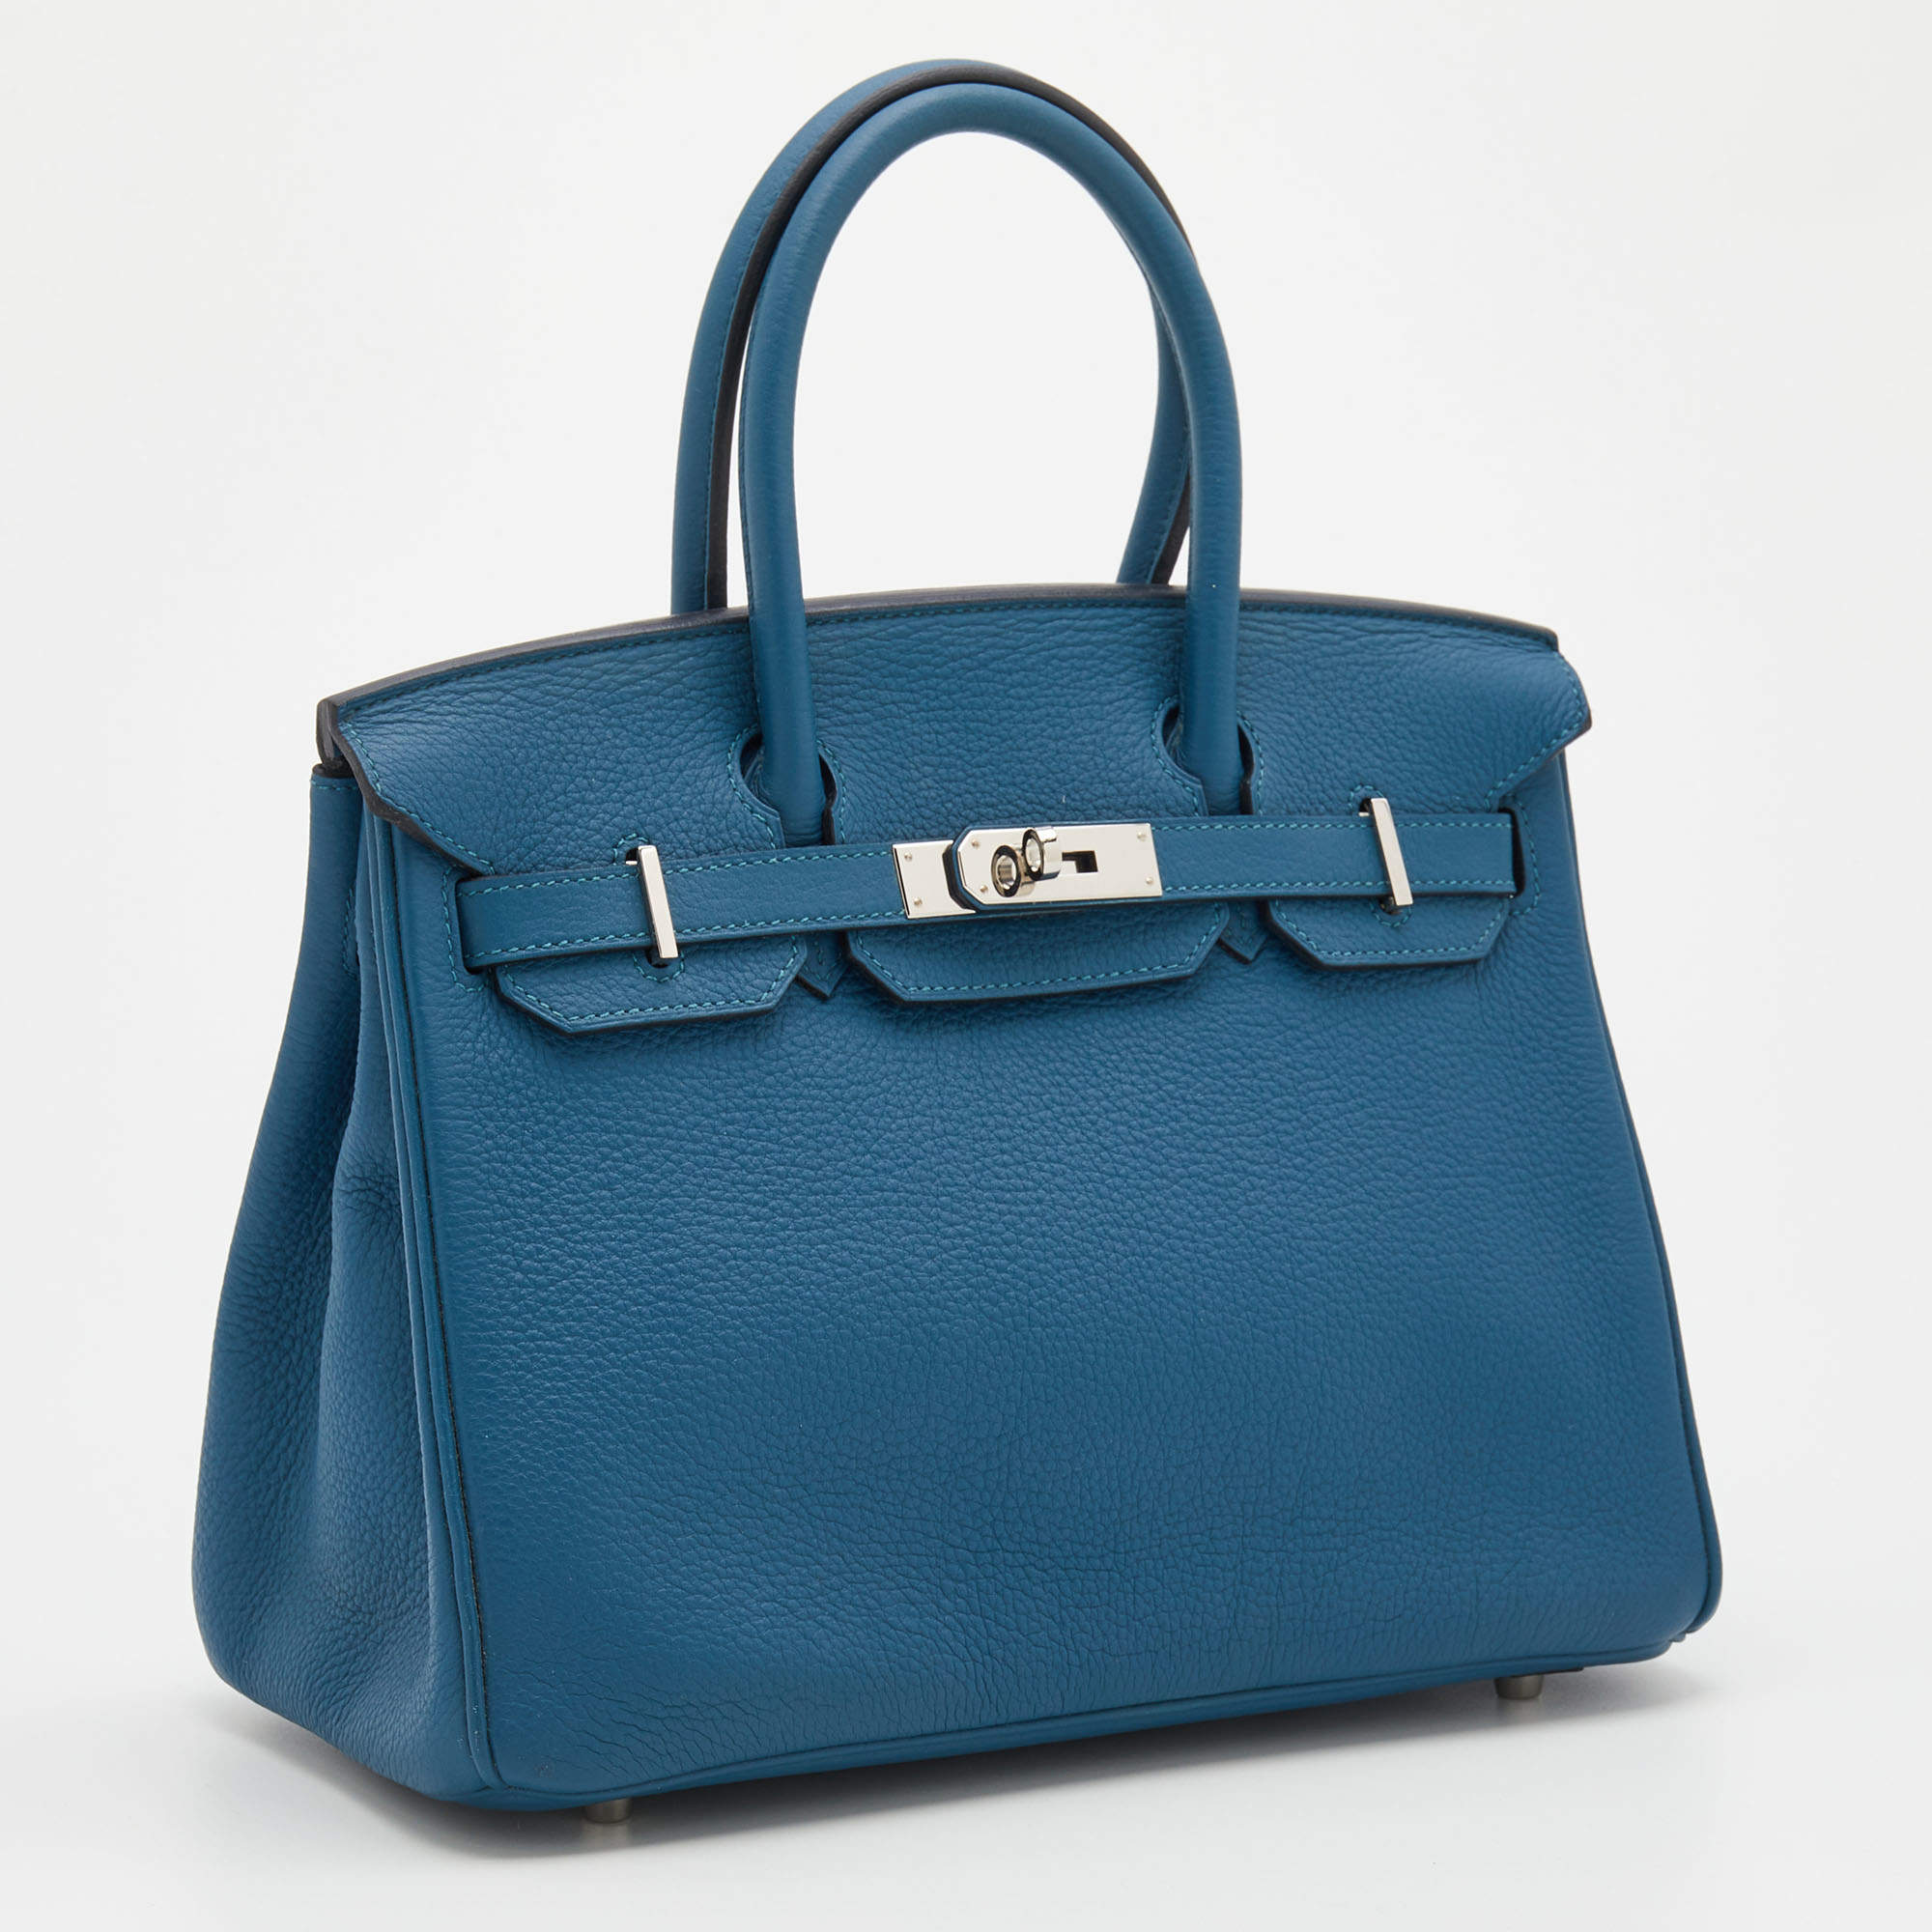 Hermès Cobalt Togo Leather Palladium Plated Birkin 30 Bag